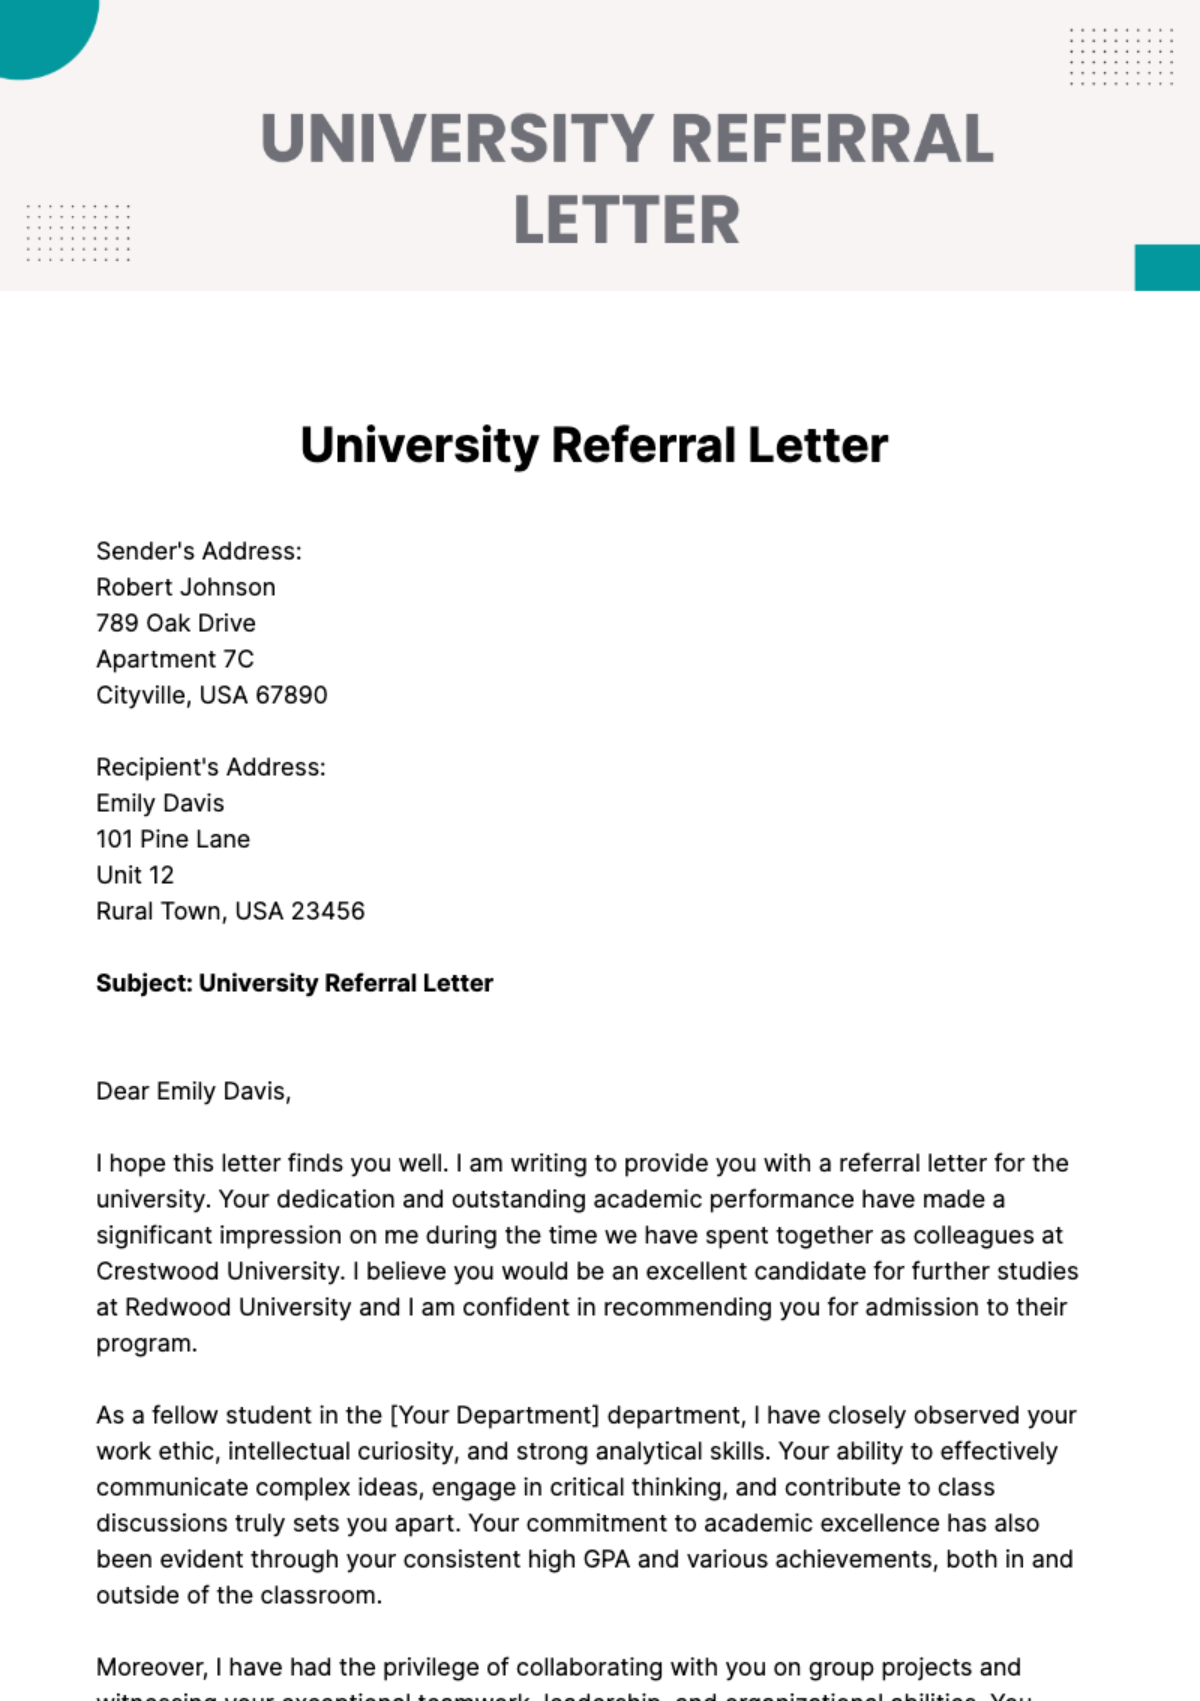 Free University Referral Letter Template